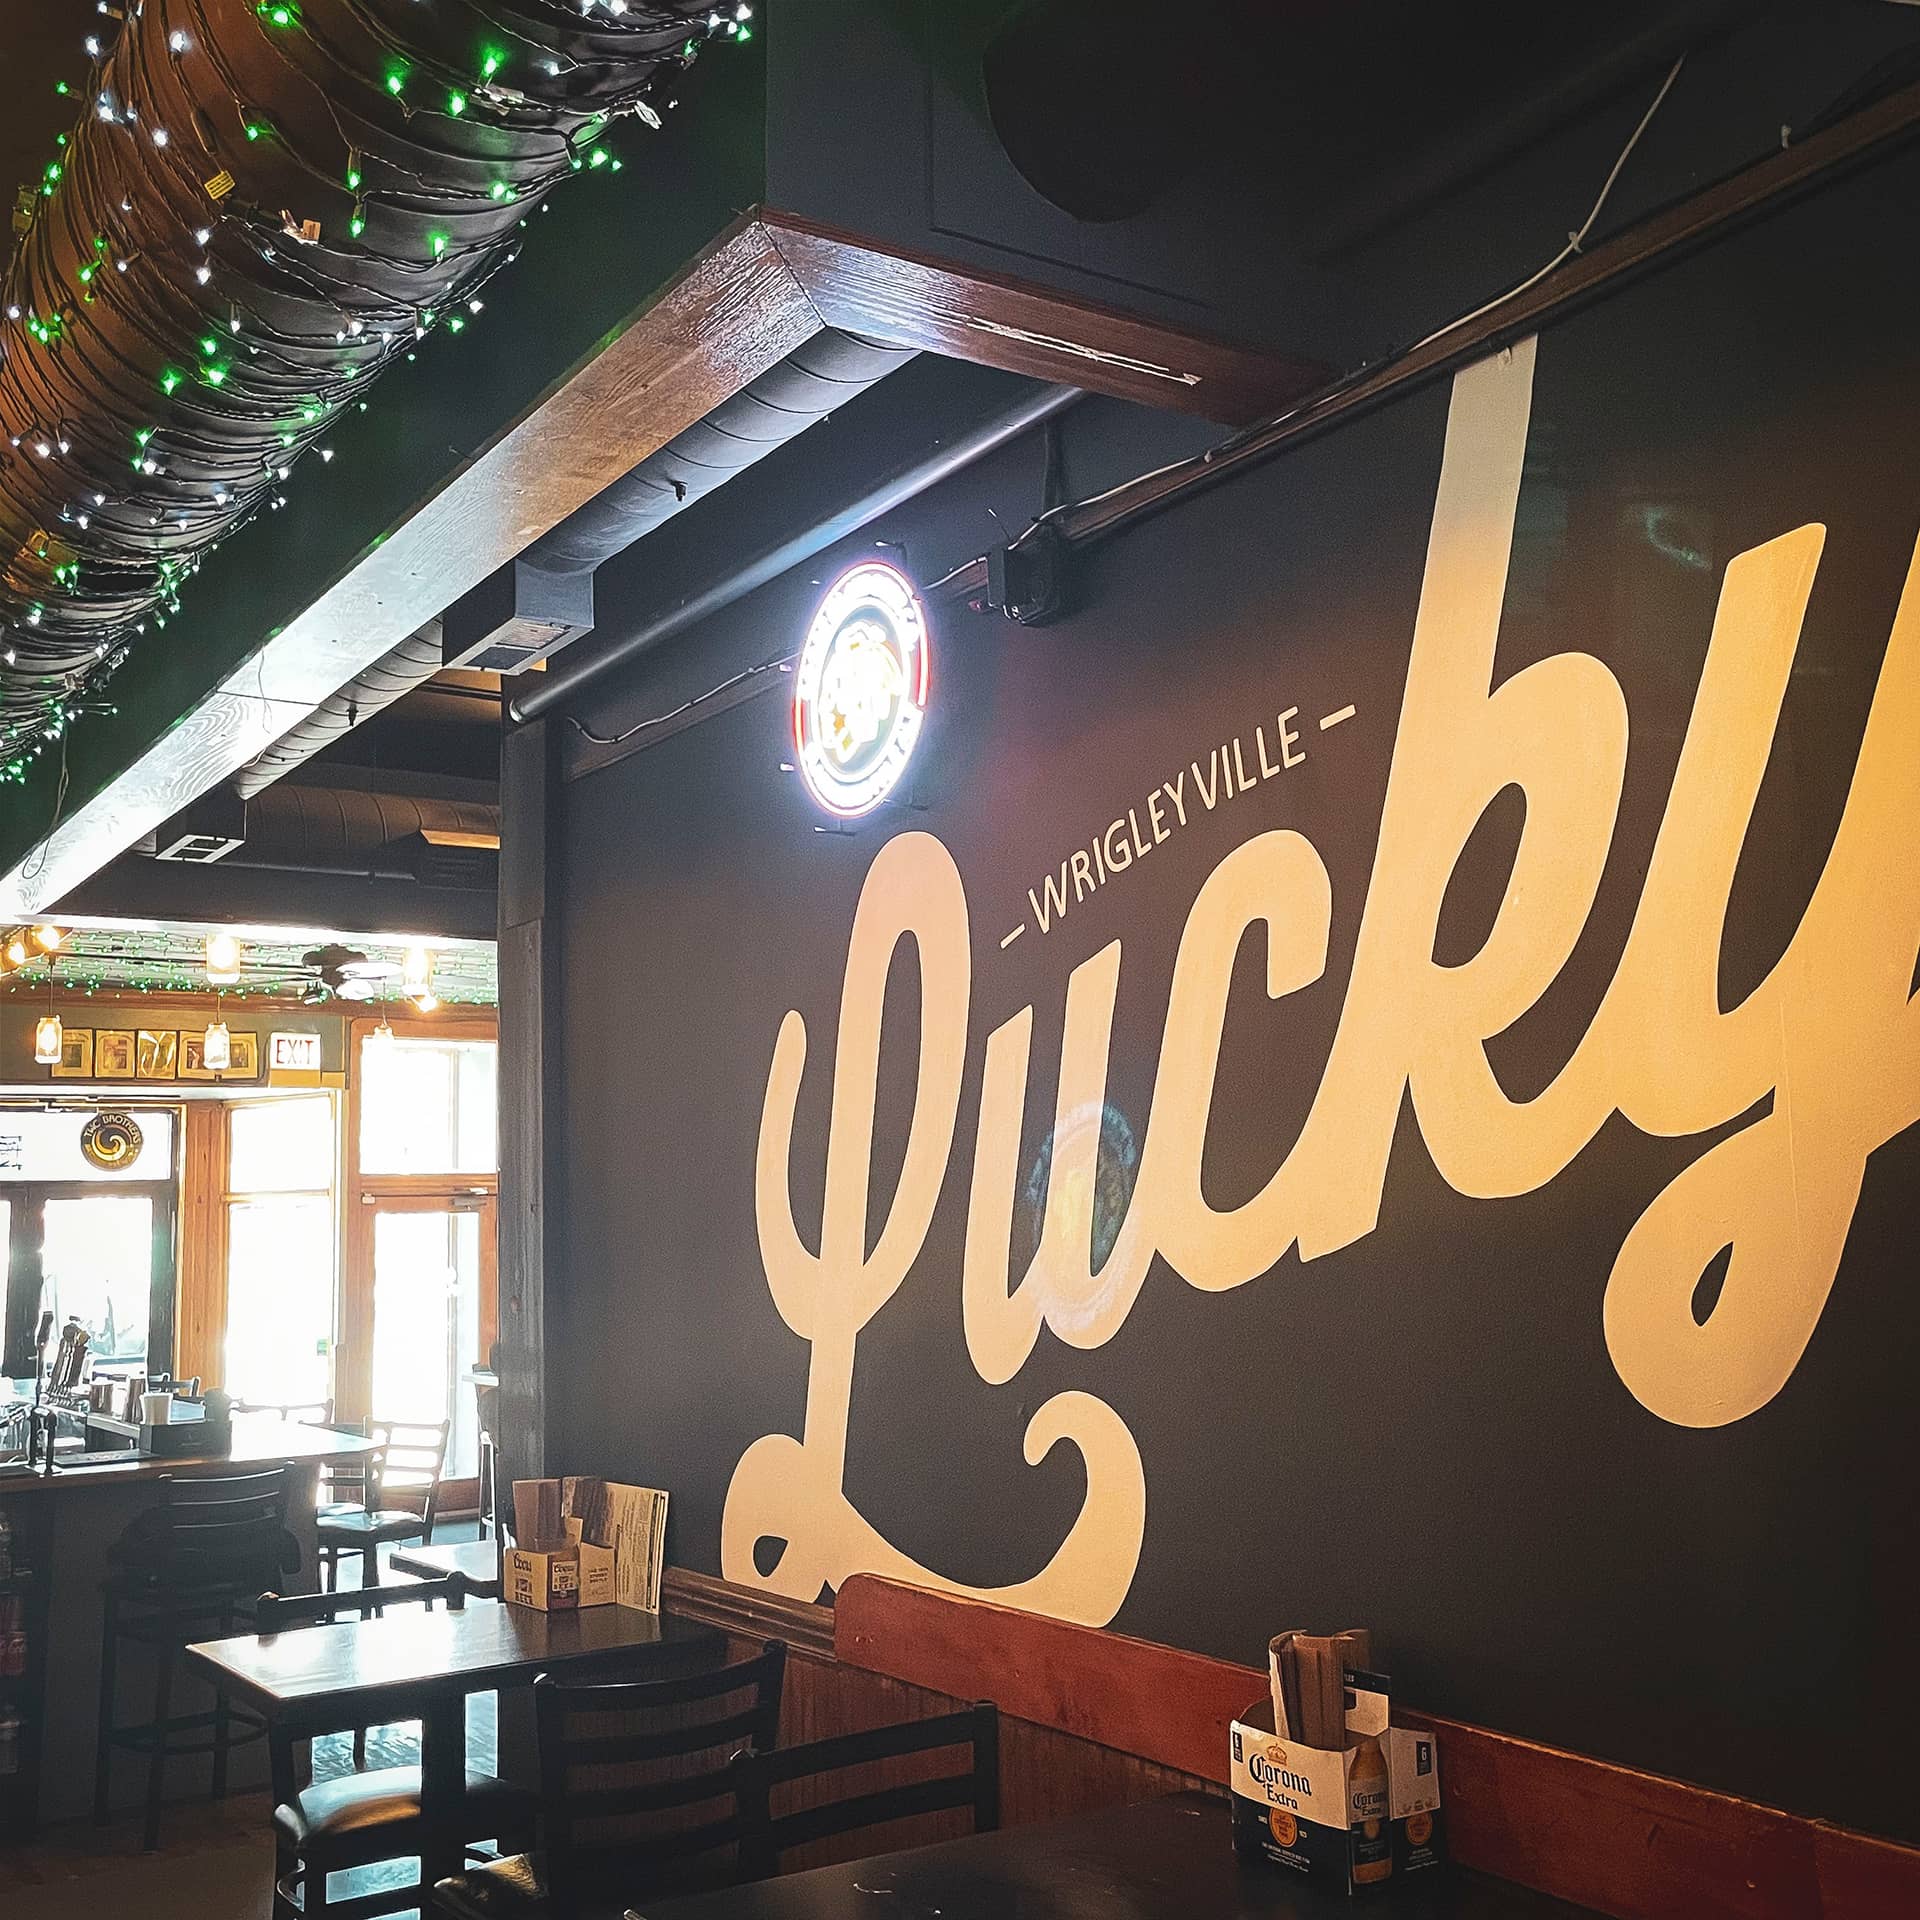 Interior of Lucky's Sandwich Company in Chicago, IL